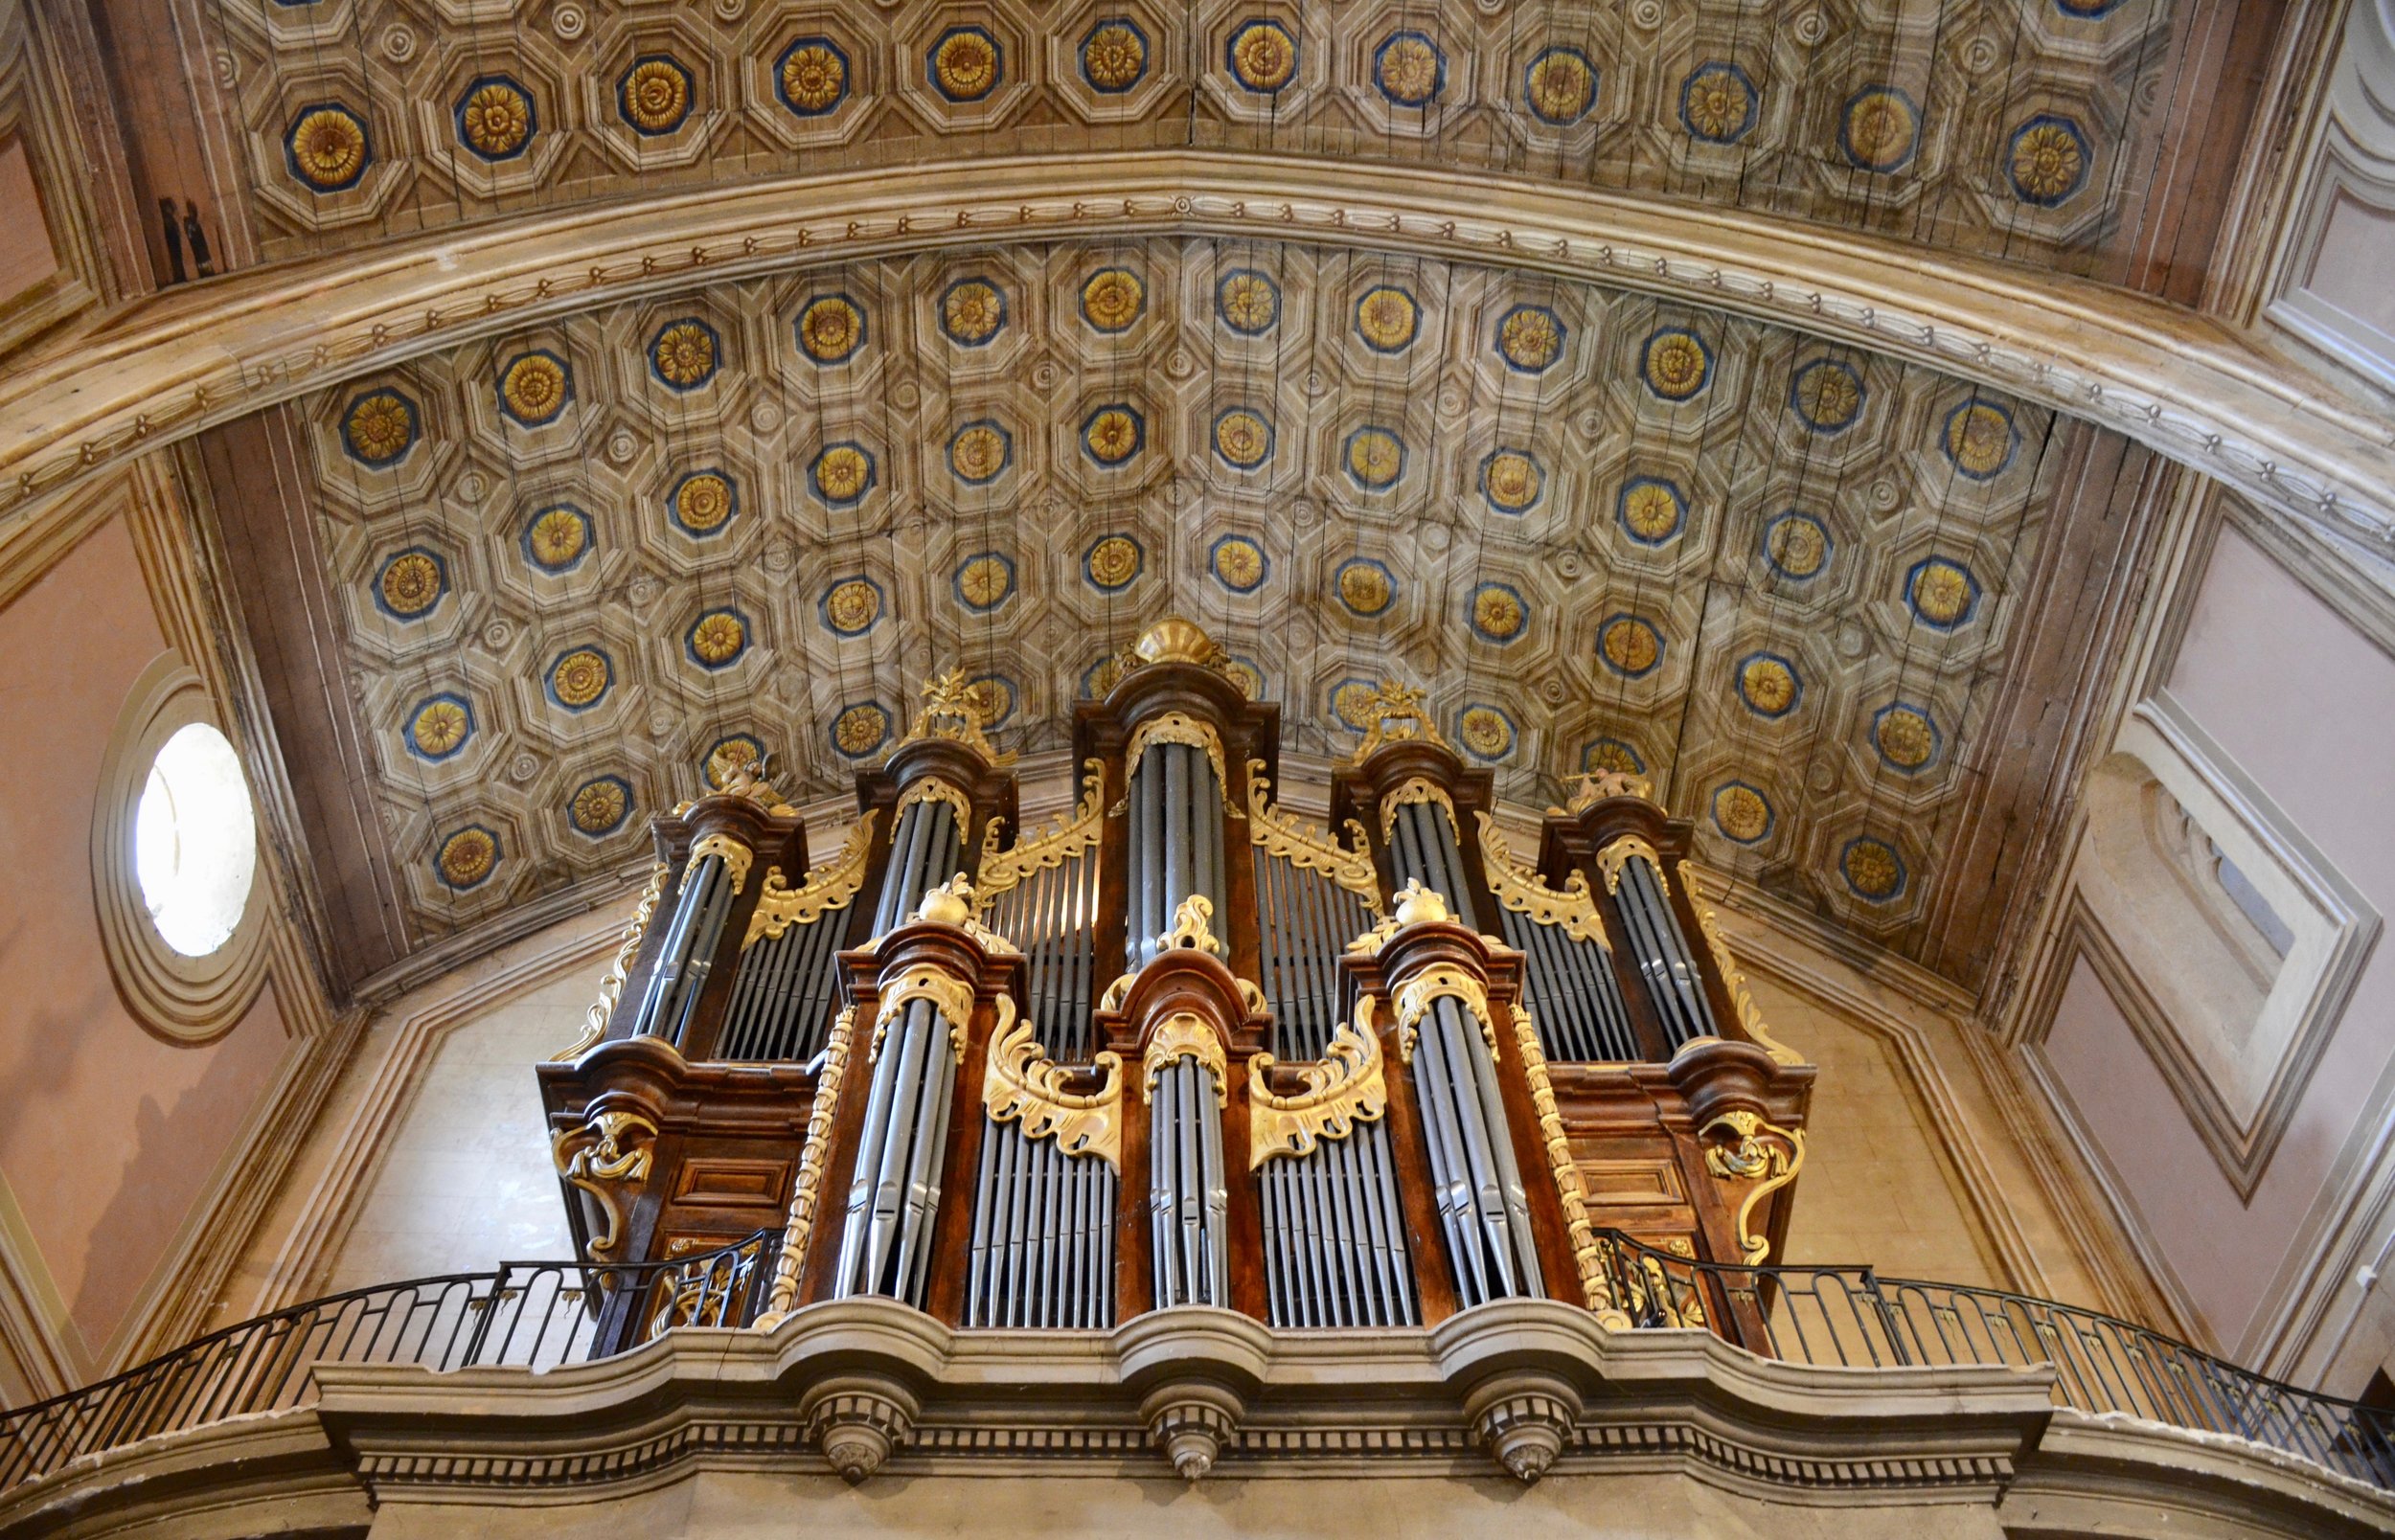 St. Felix church organ built by Gregoire Rabiny